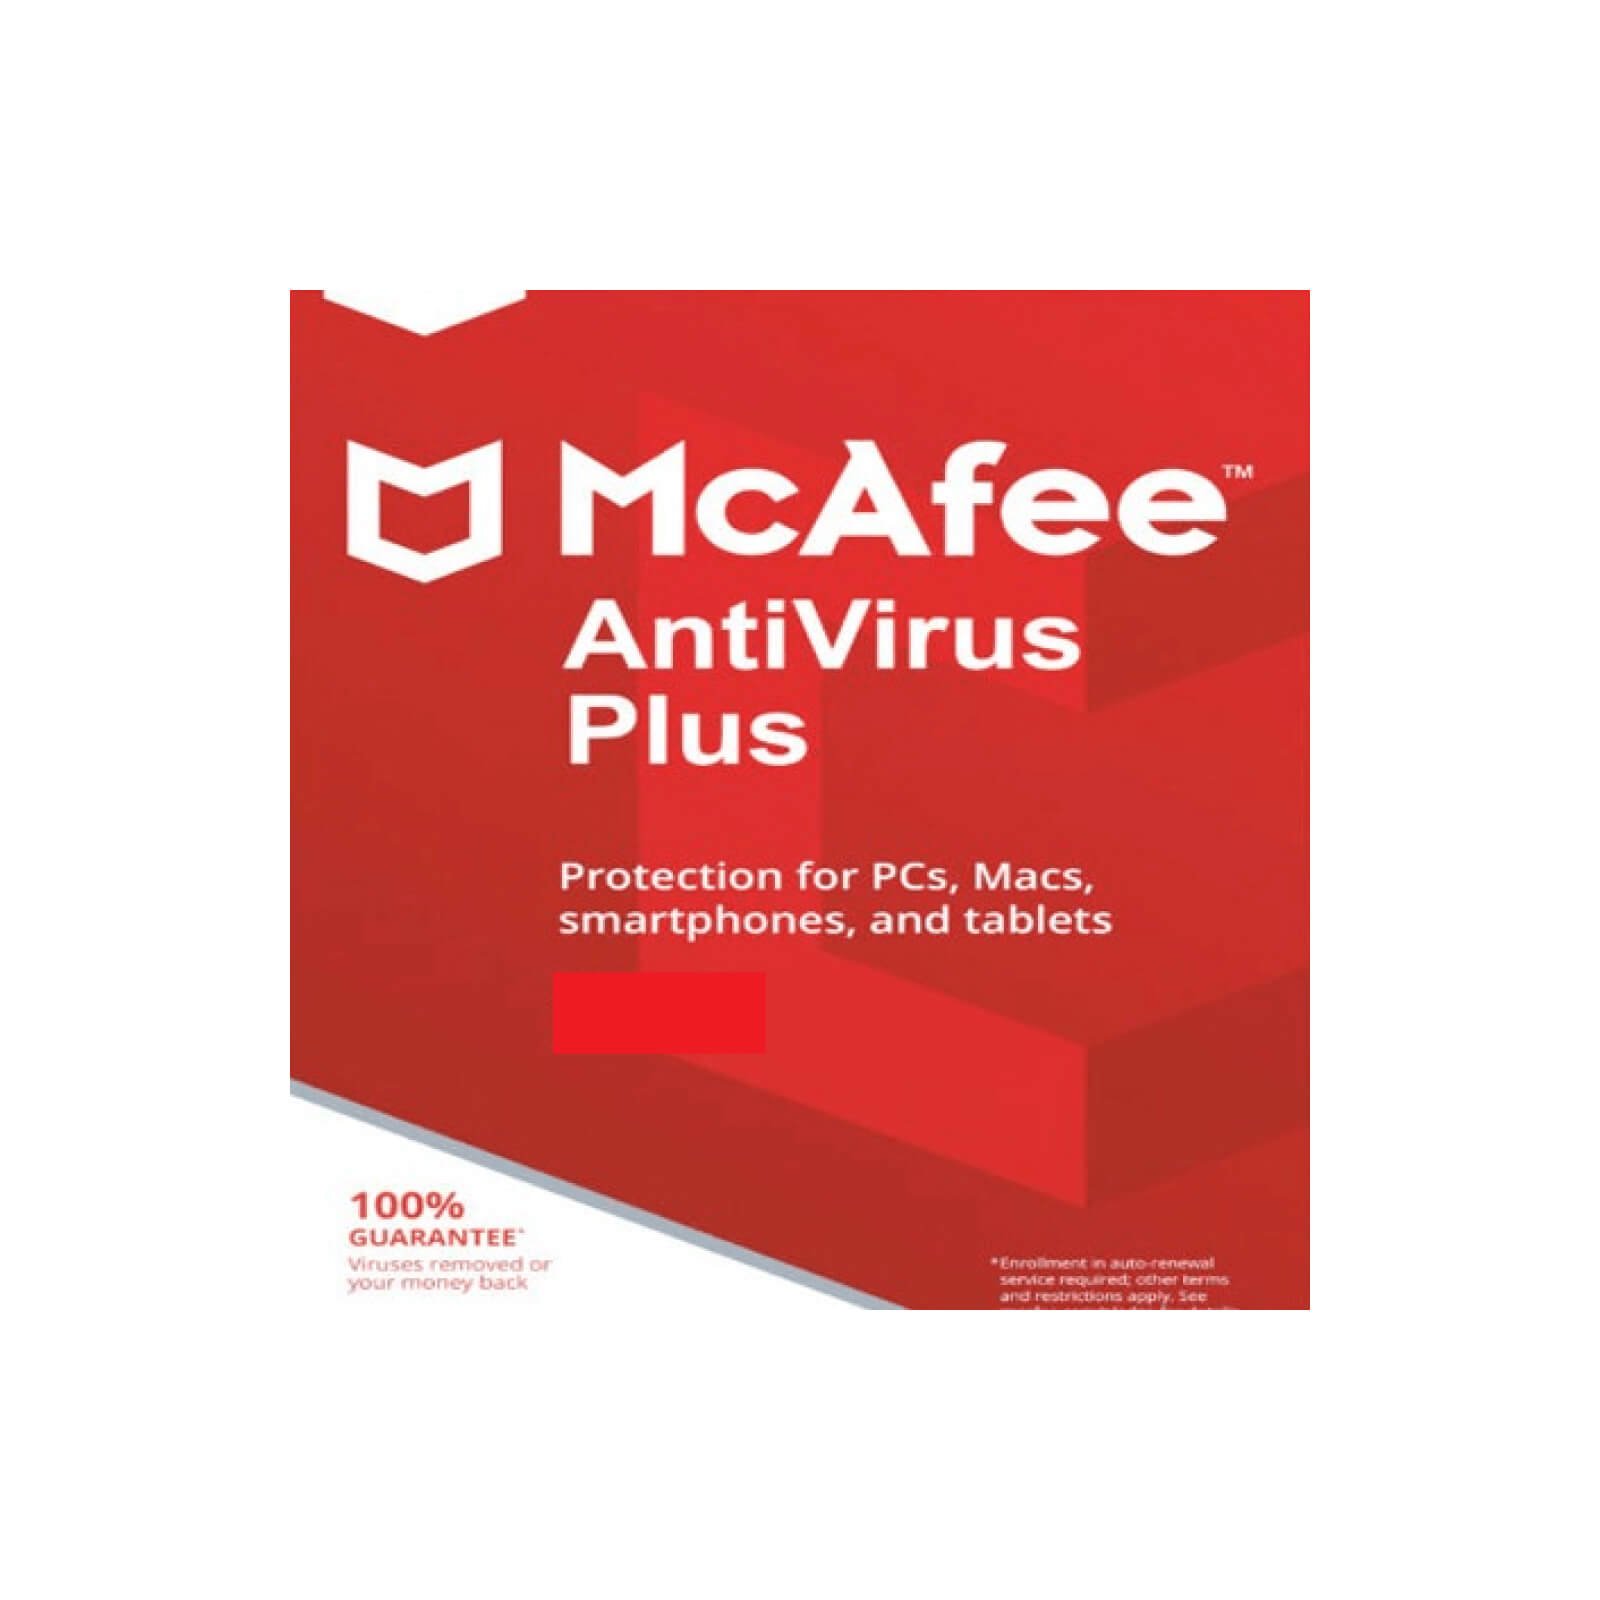 McAfee Antivirus Plus keyportal.de